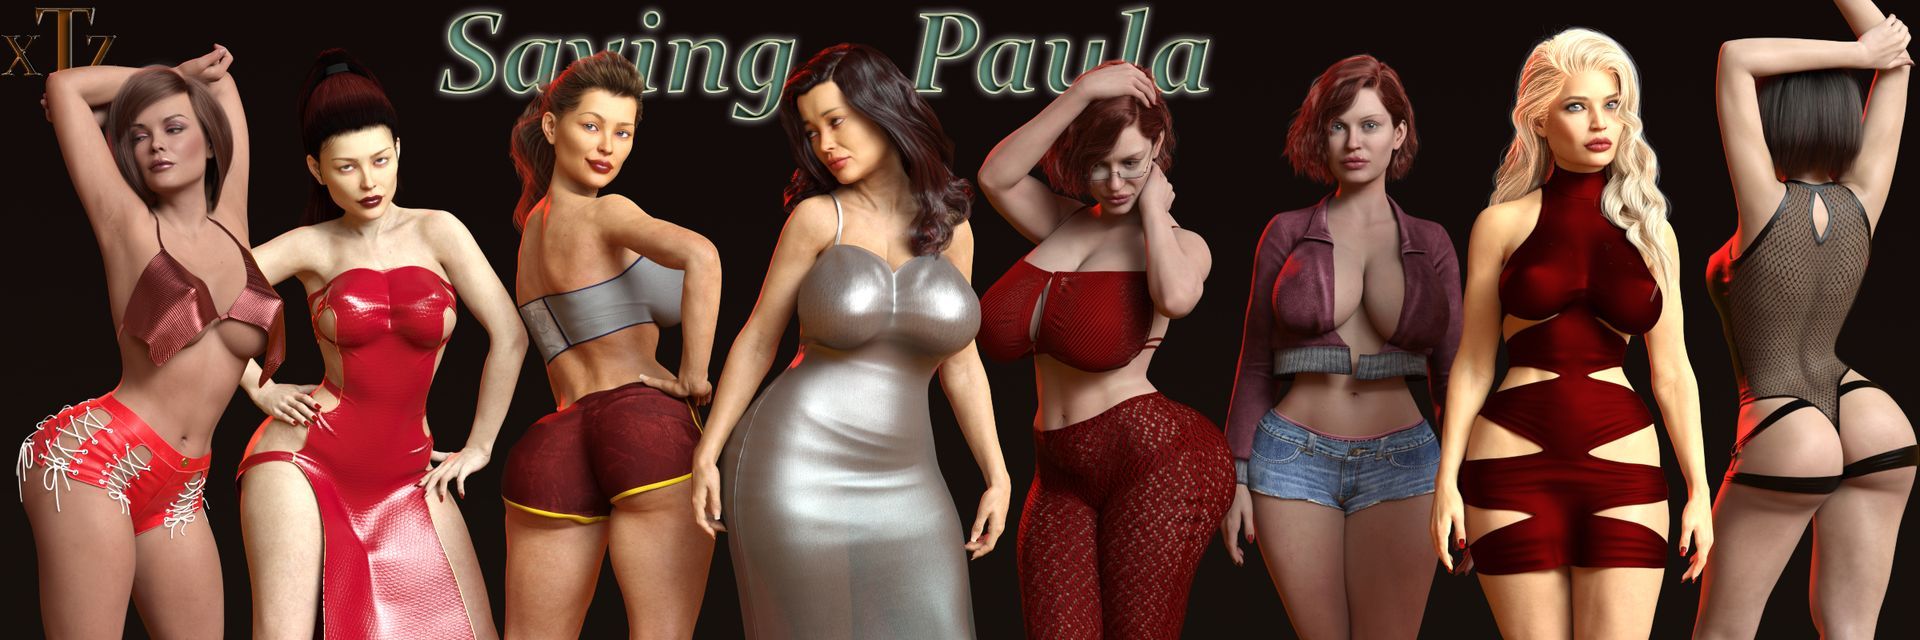 Saving Paula Adult Game Android Download